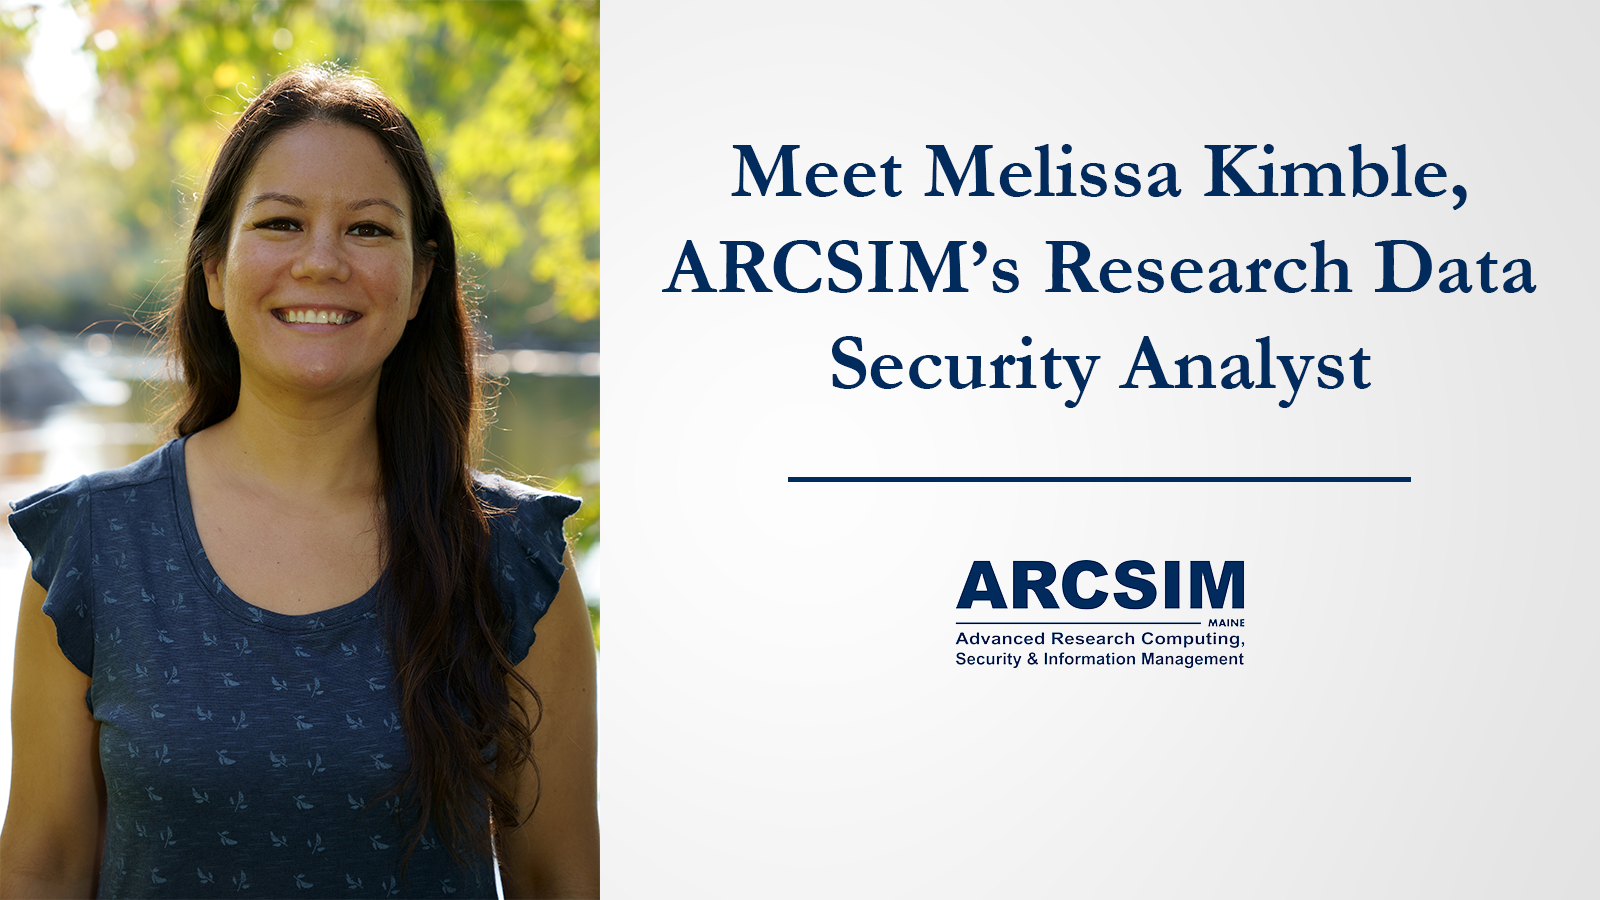 Photo of Melissa Kimble with text that reads "Meet Melissa Kimble, ARCSIM's Research Data Security Analyst." beneath text is arcsim logo.